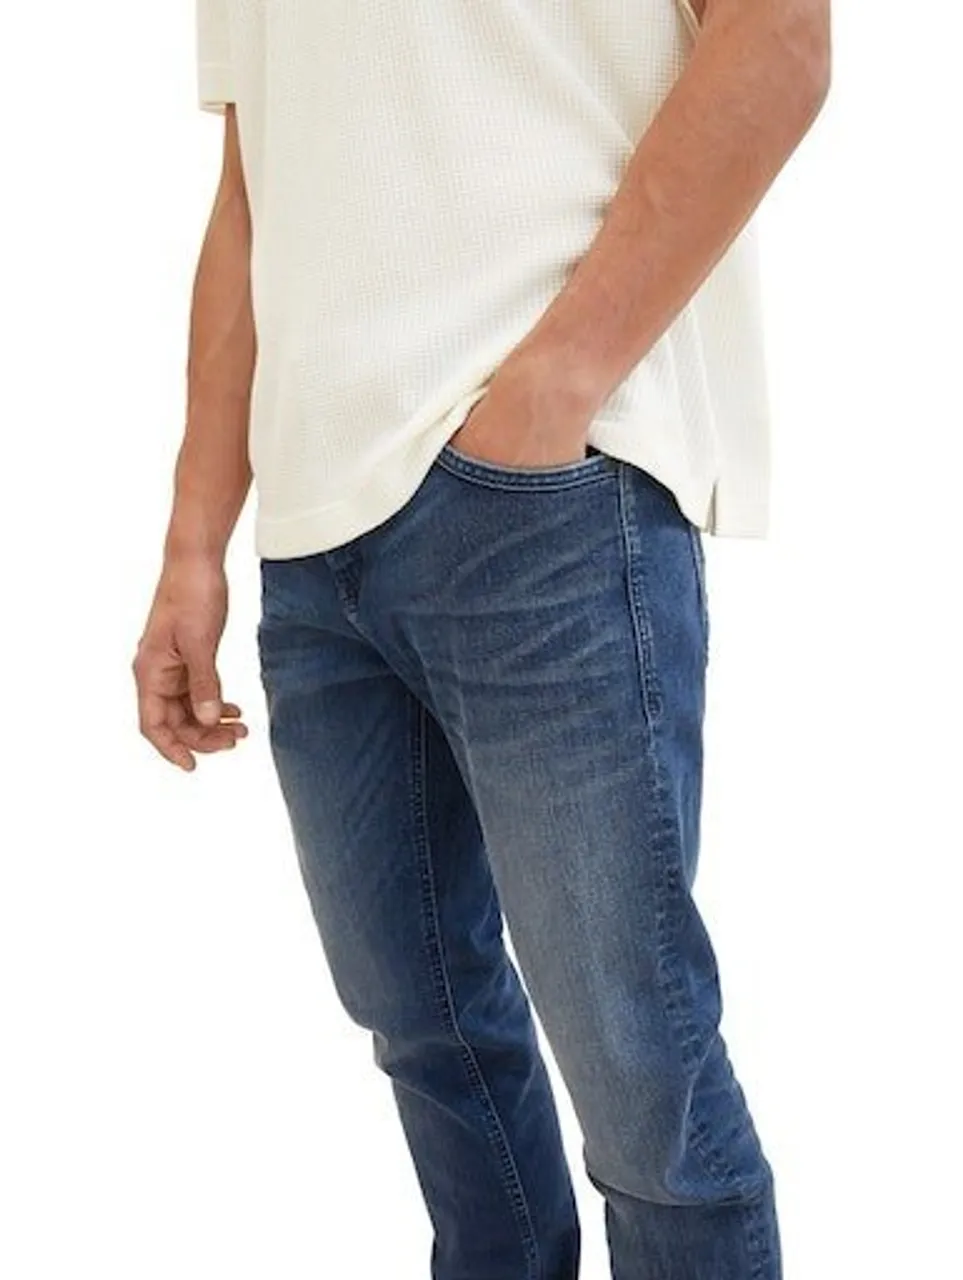 TOM TAILOR Slim-fit-Jeans in dunkler Waschung